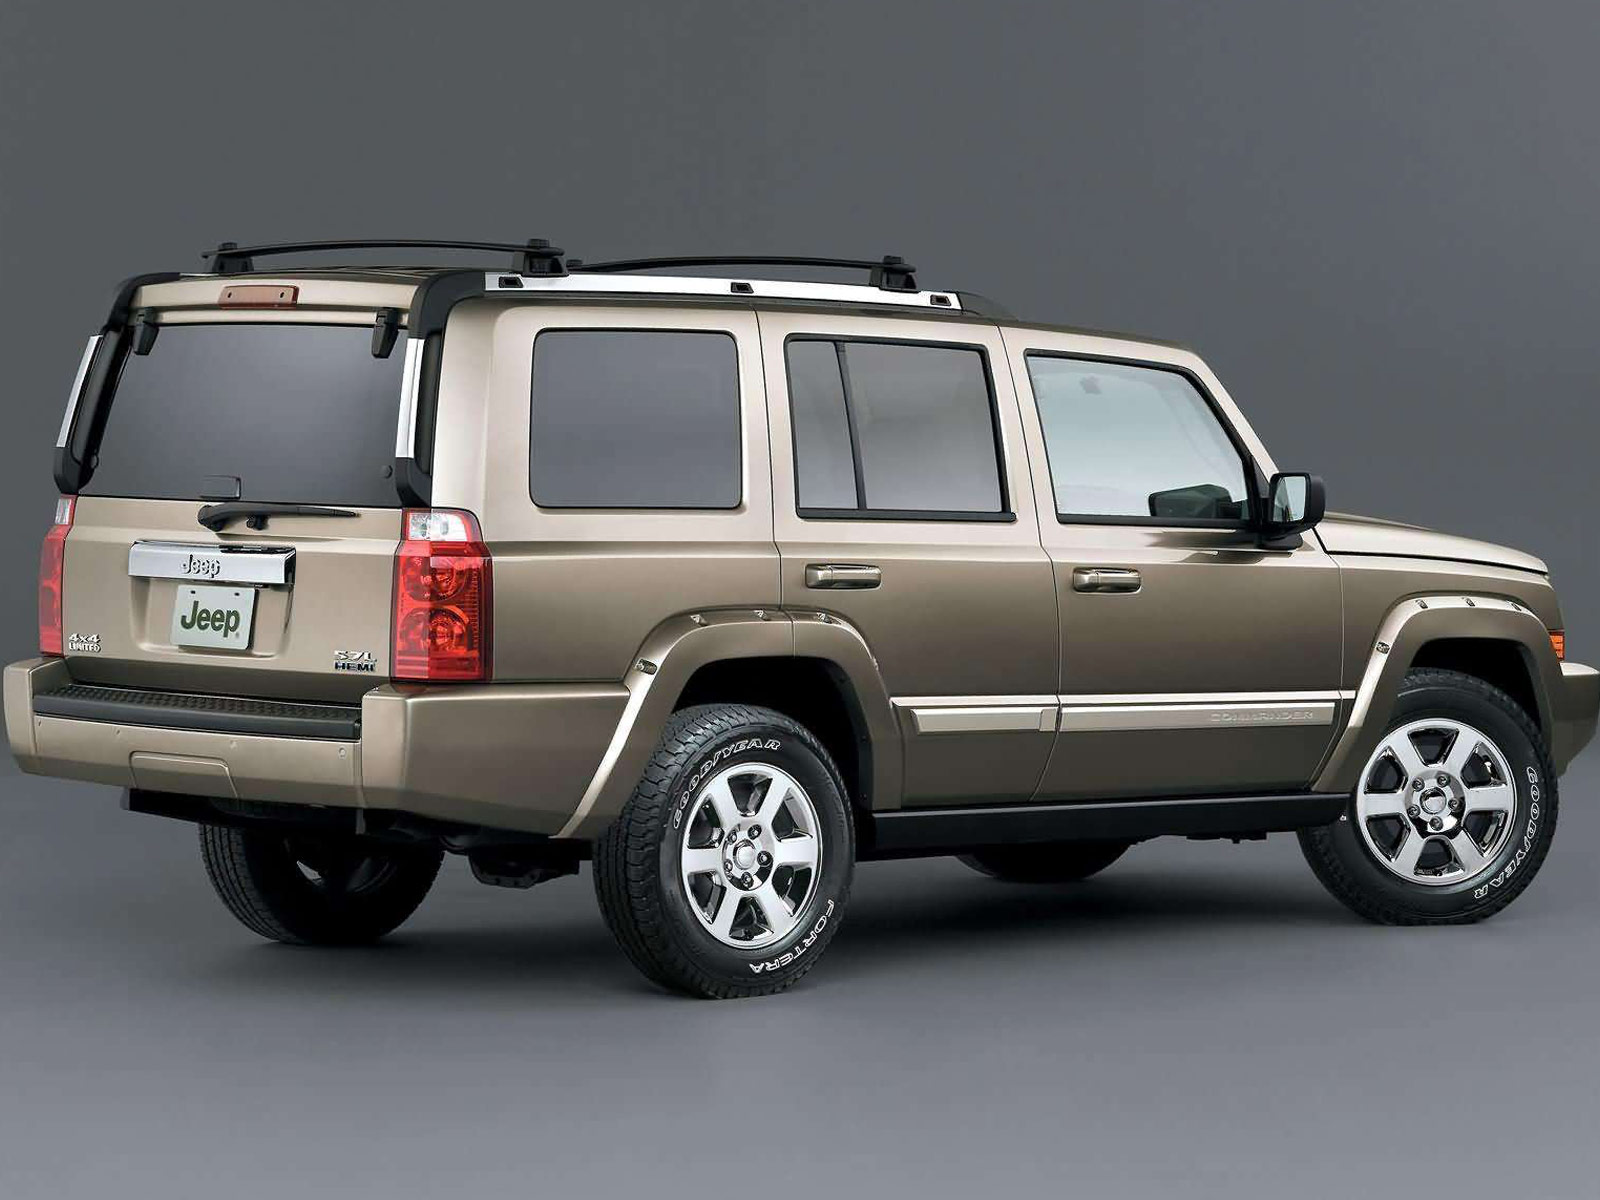 2005 jeep grand cherokee 5.7 hemi review